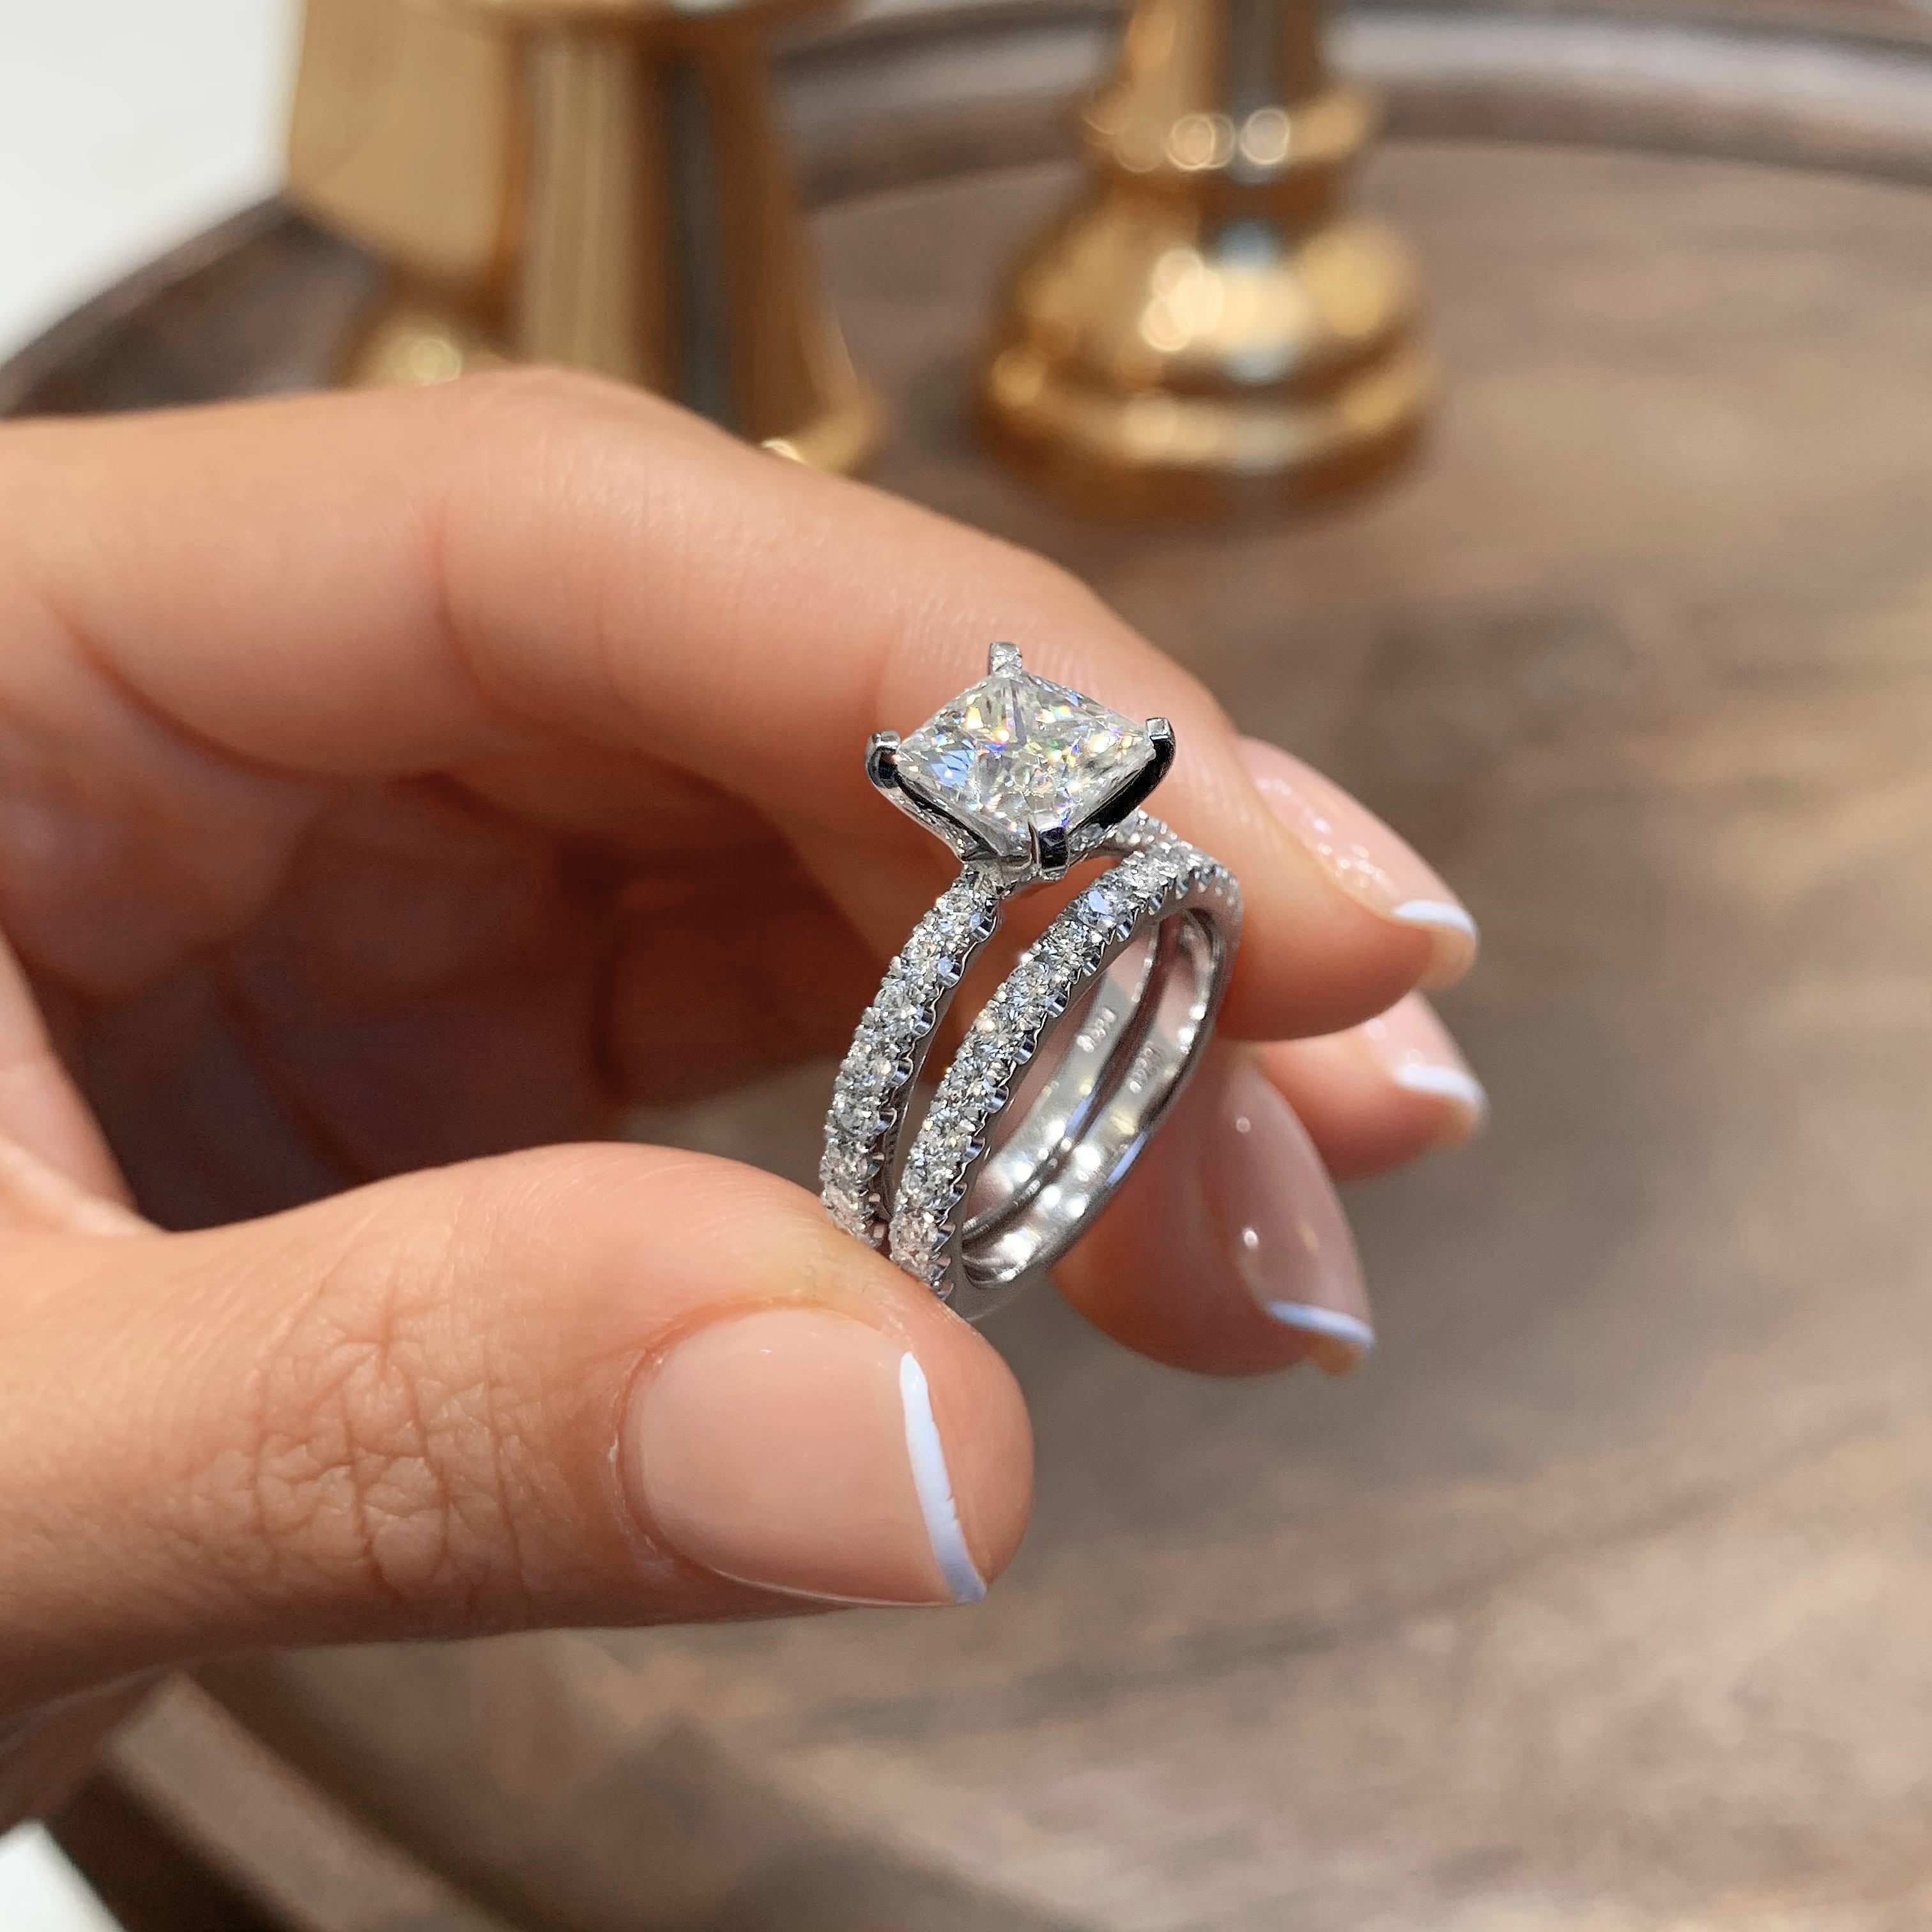 Spinning engagement ring!, Weddings, Wedding Attire